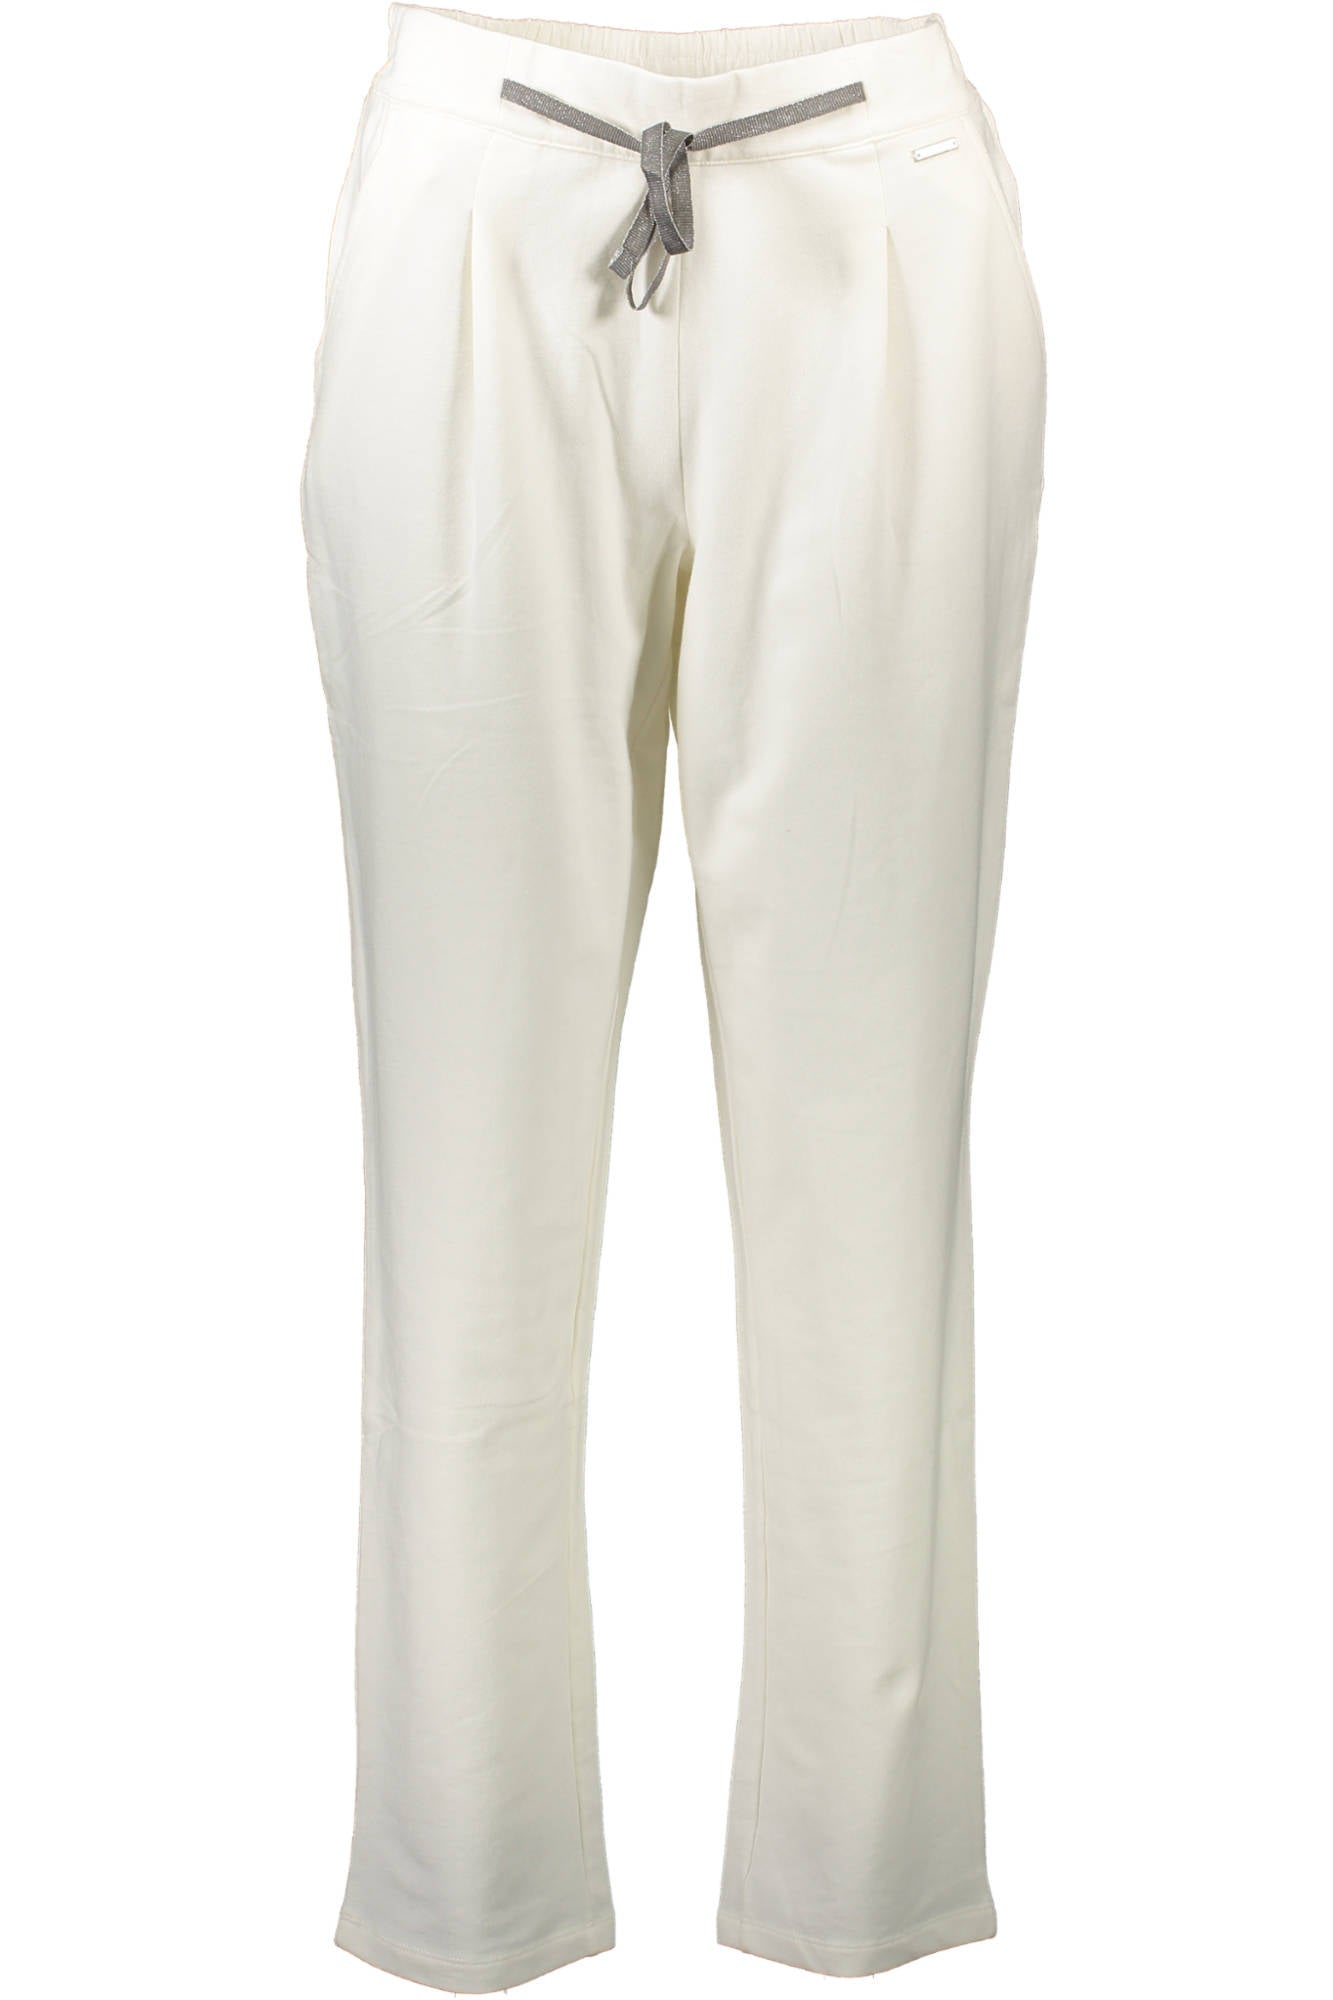 U.S. POLO ASSN. White Jeans & Pant - Fizigo